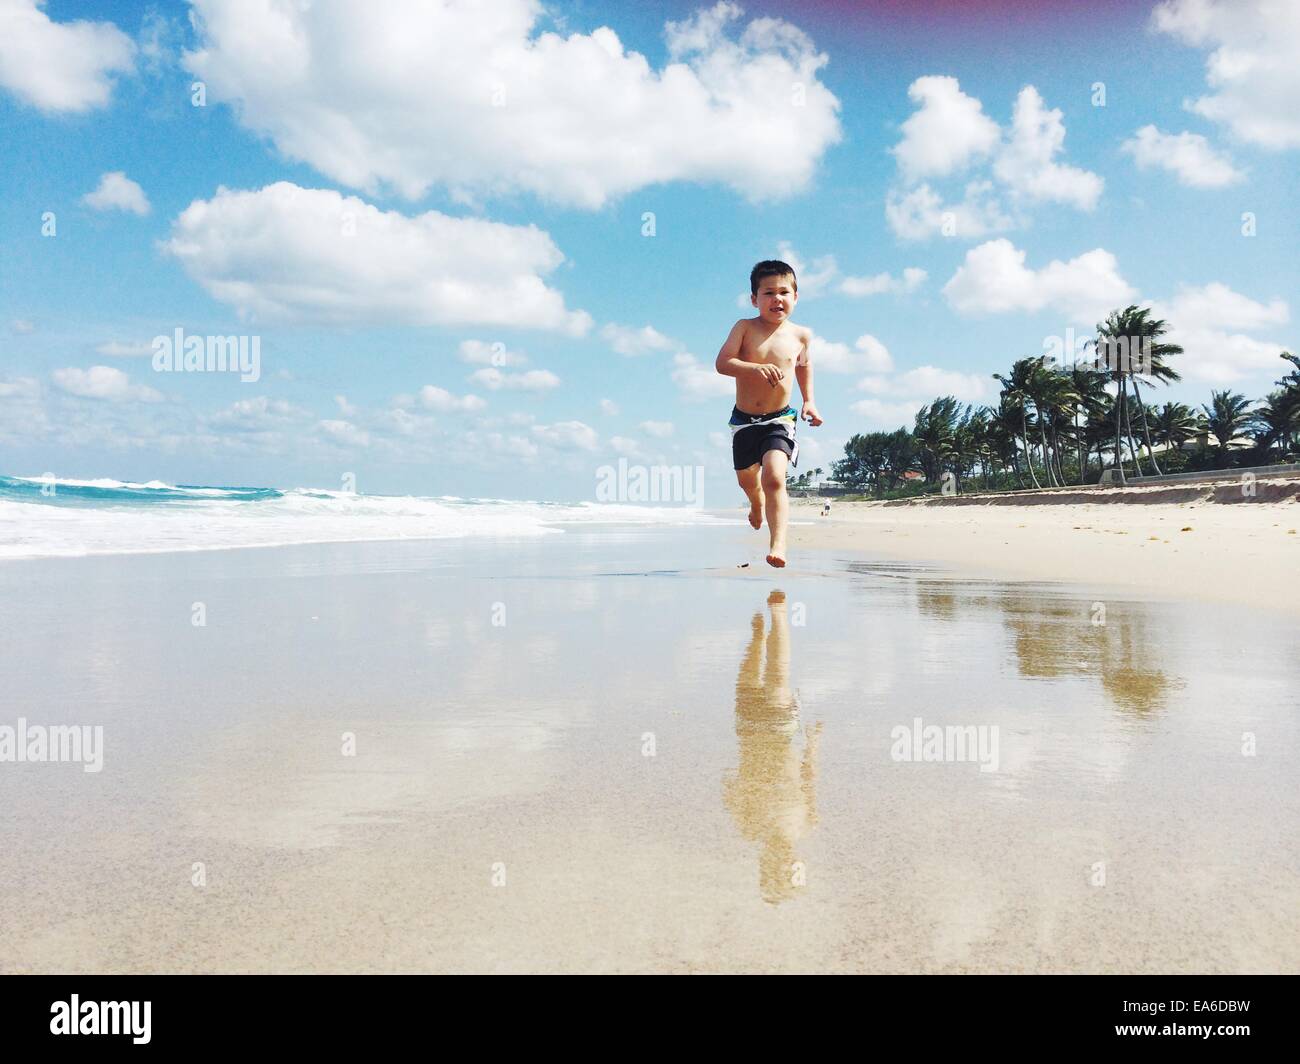 USA, Florida, Palm Beach County, West Palm Beach, Boy (2-3) running on beach Stock Photo